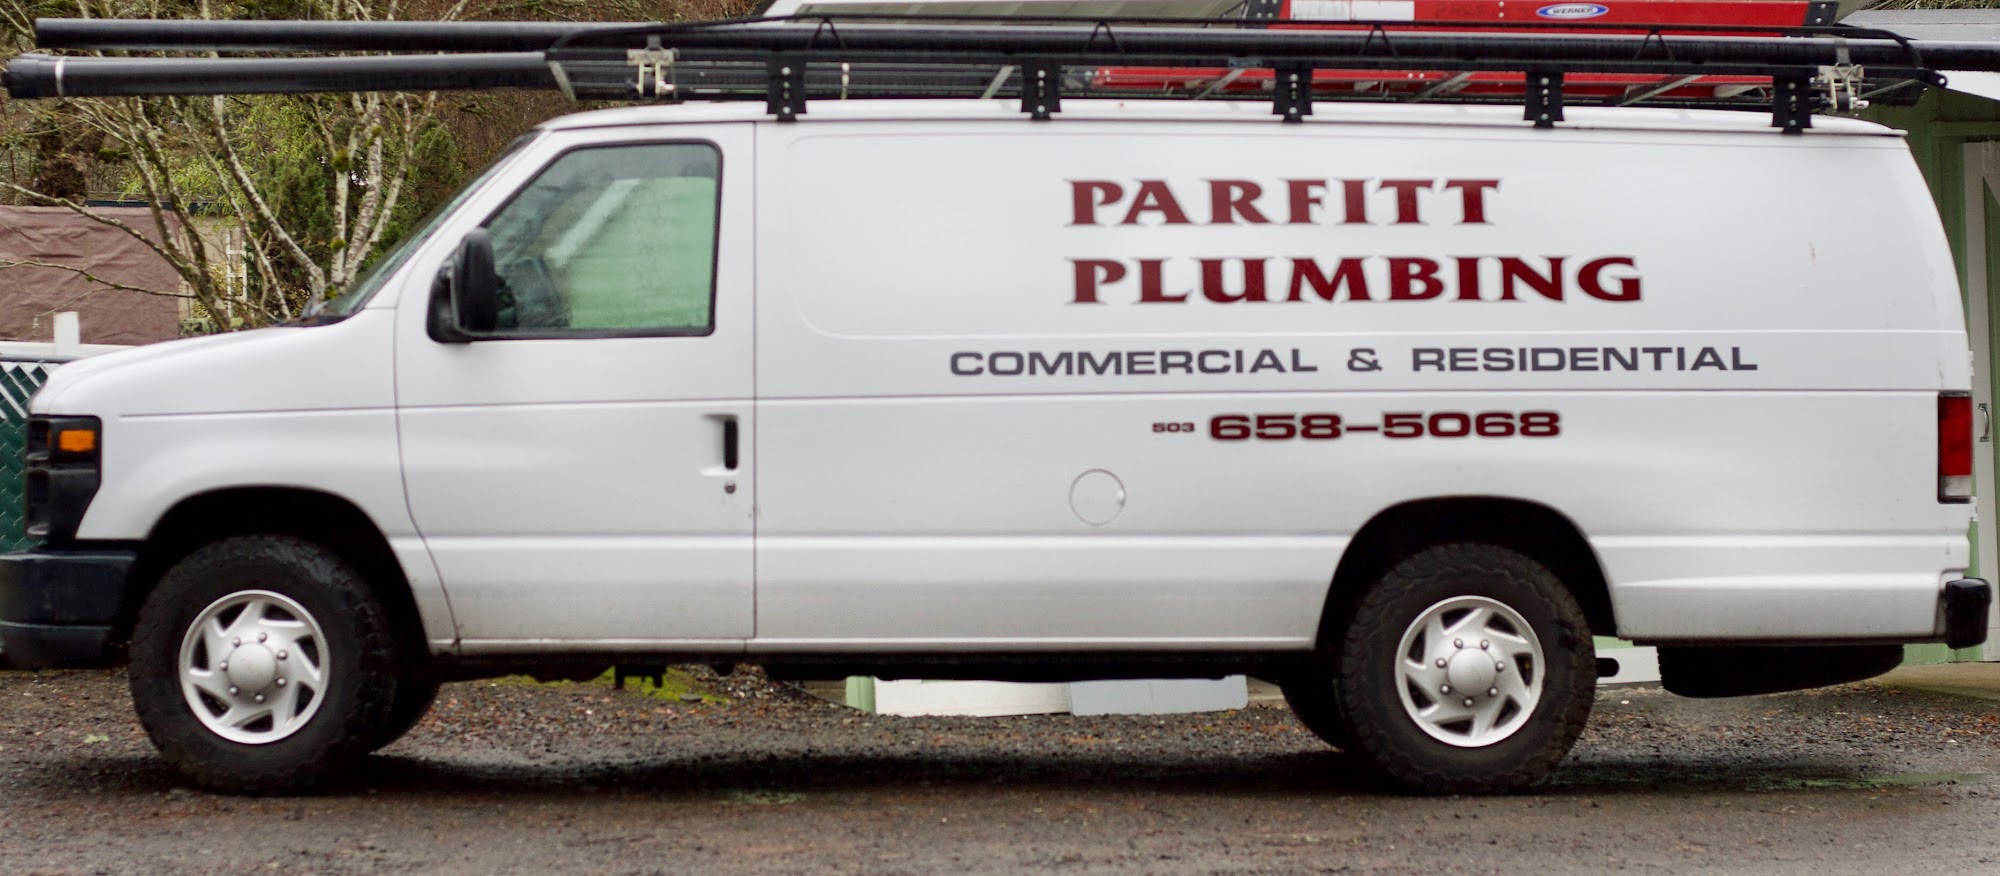 Parfitt Plumbing 12172 SE 222nd Dr, Damascus Oregon 97089